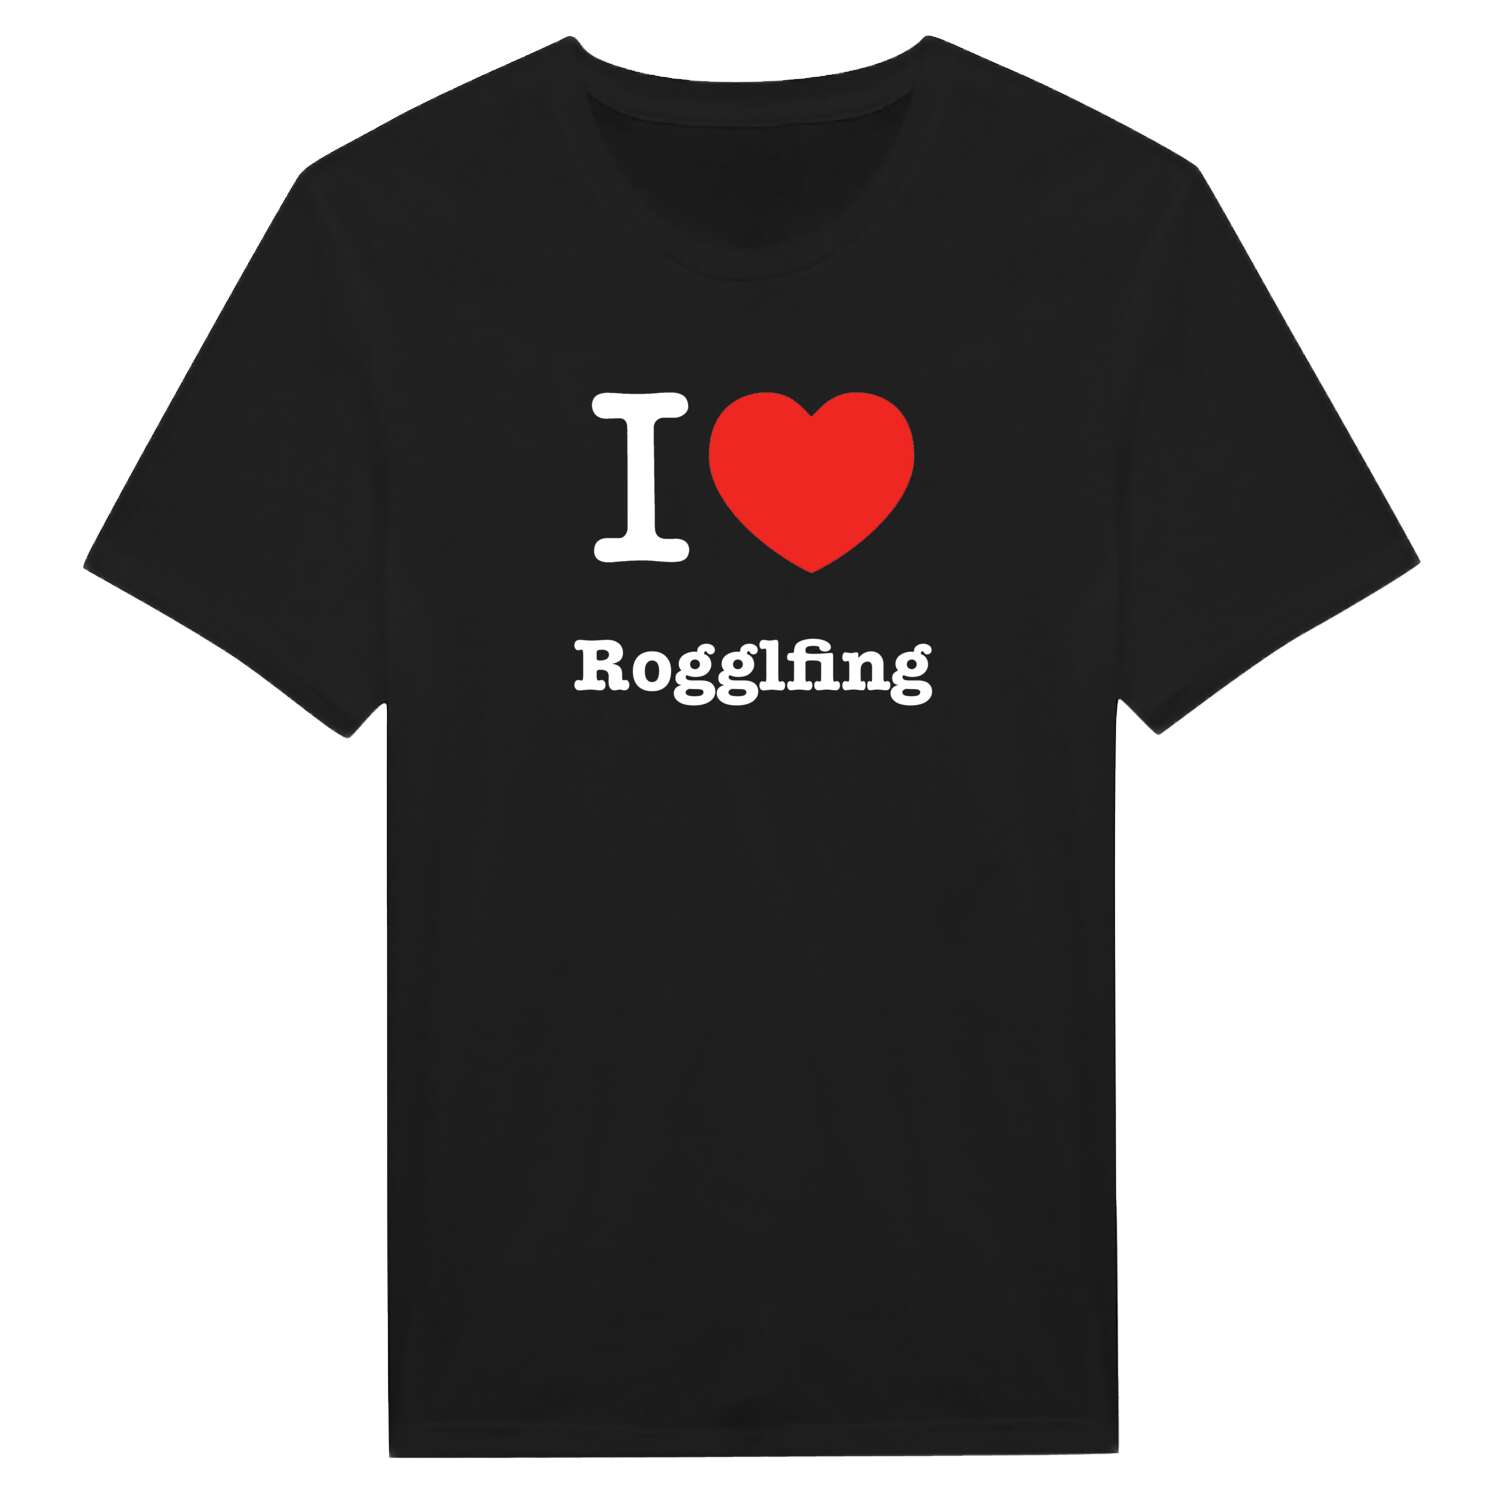 Rogglfing T-Shirt »I love«